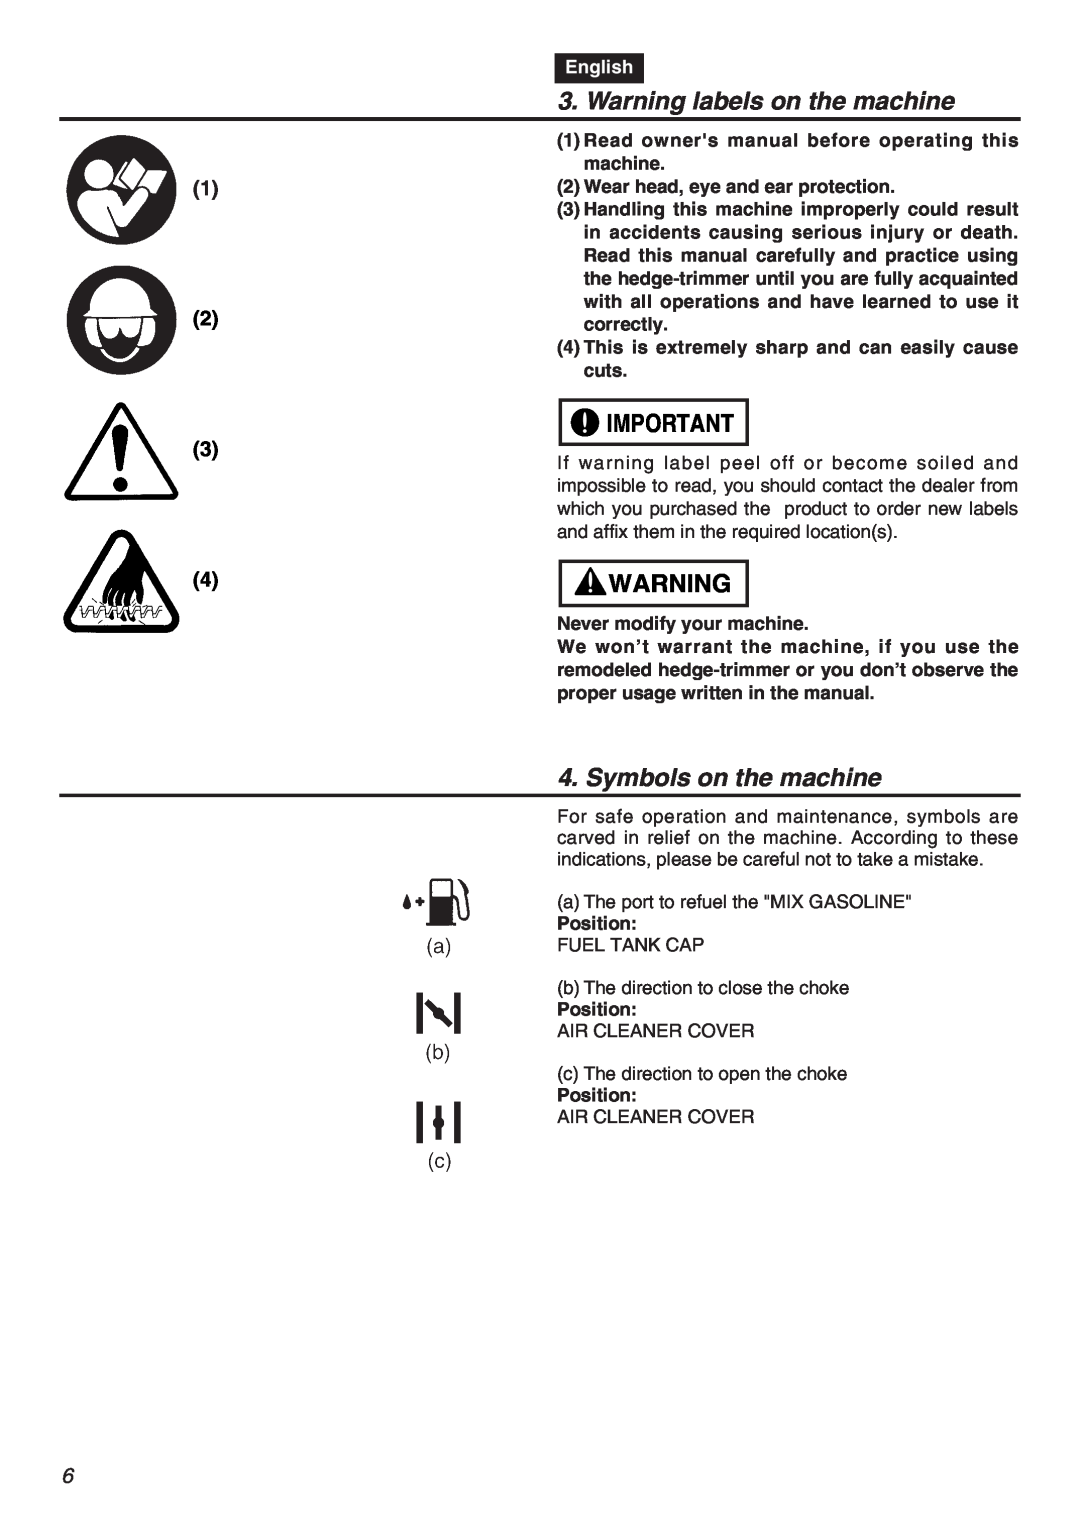 Zenoah HTZ2401-CA, CHTZ2401L manual Warning labels on the machine, Symbols on the machine, English 